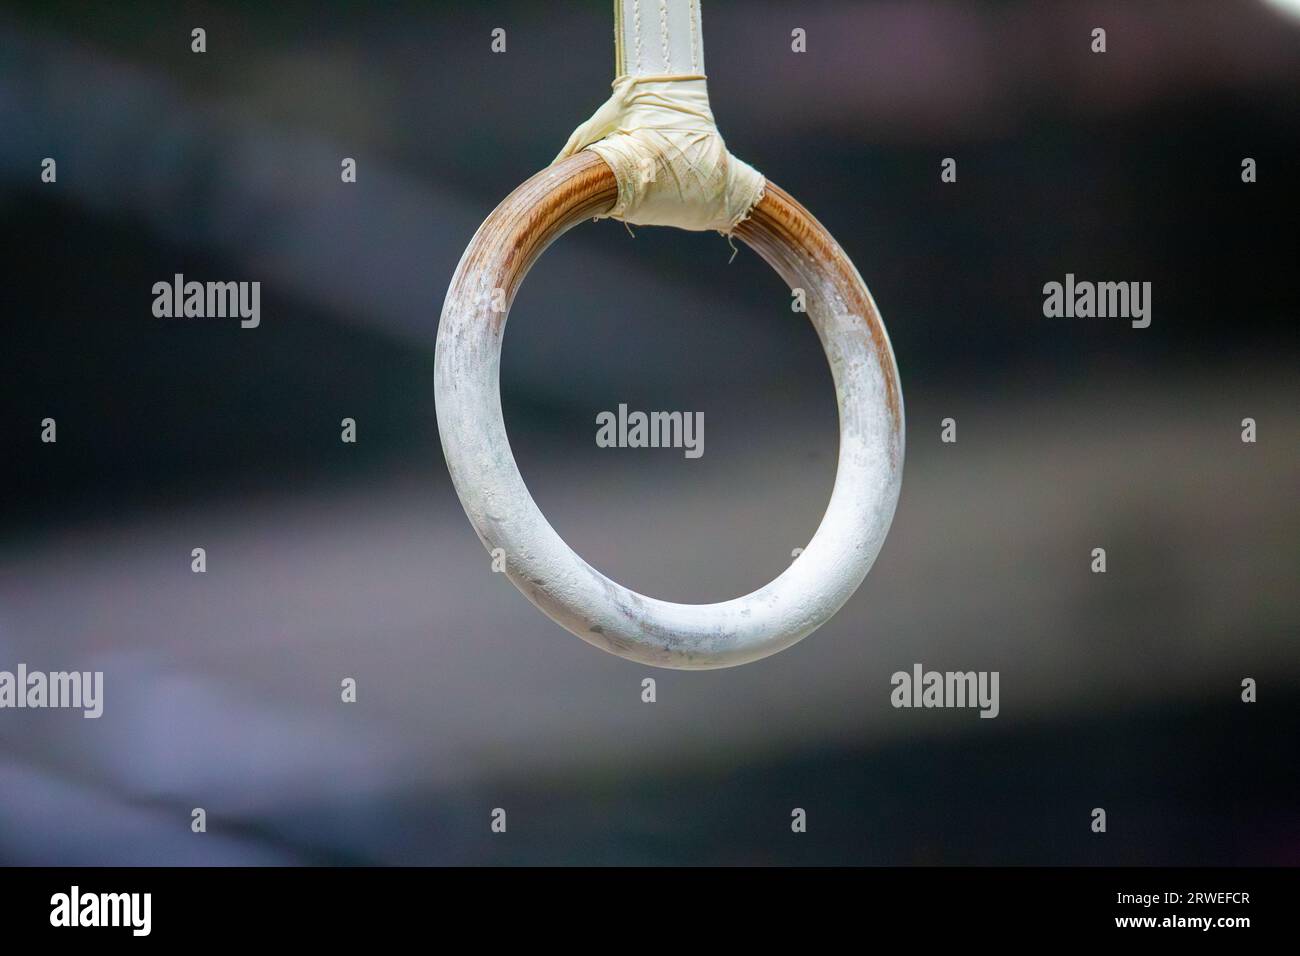 Symbol image of apparatus gymnastics: Close-up of a ring, sports equipment in mens apparatus gymnastics Stock Photo